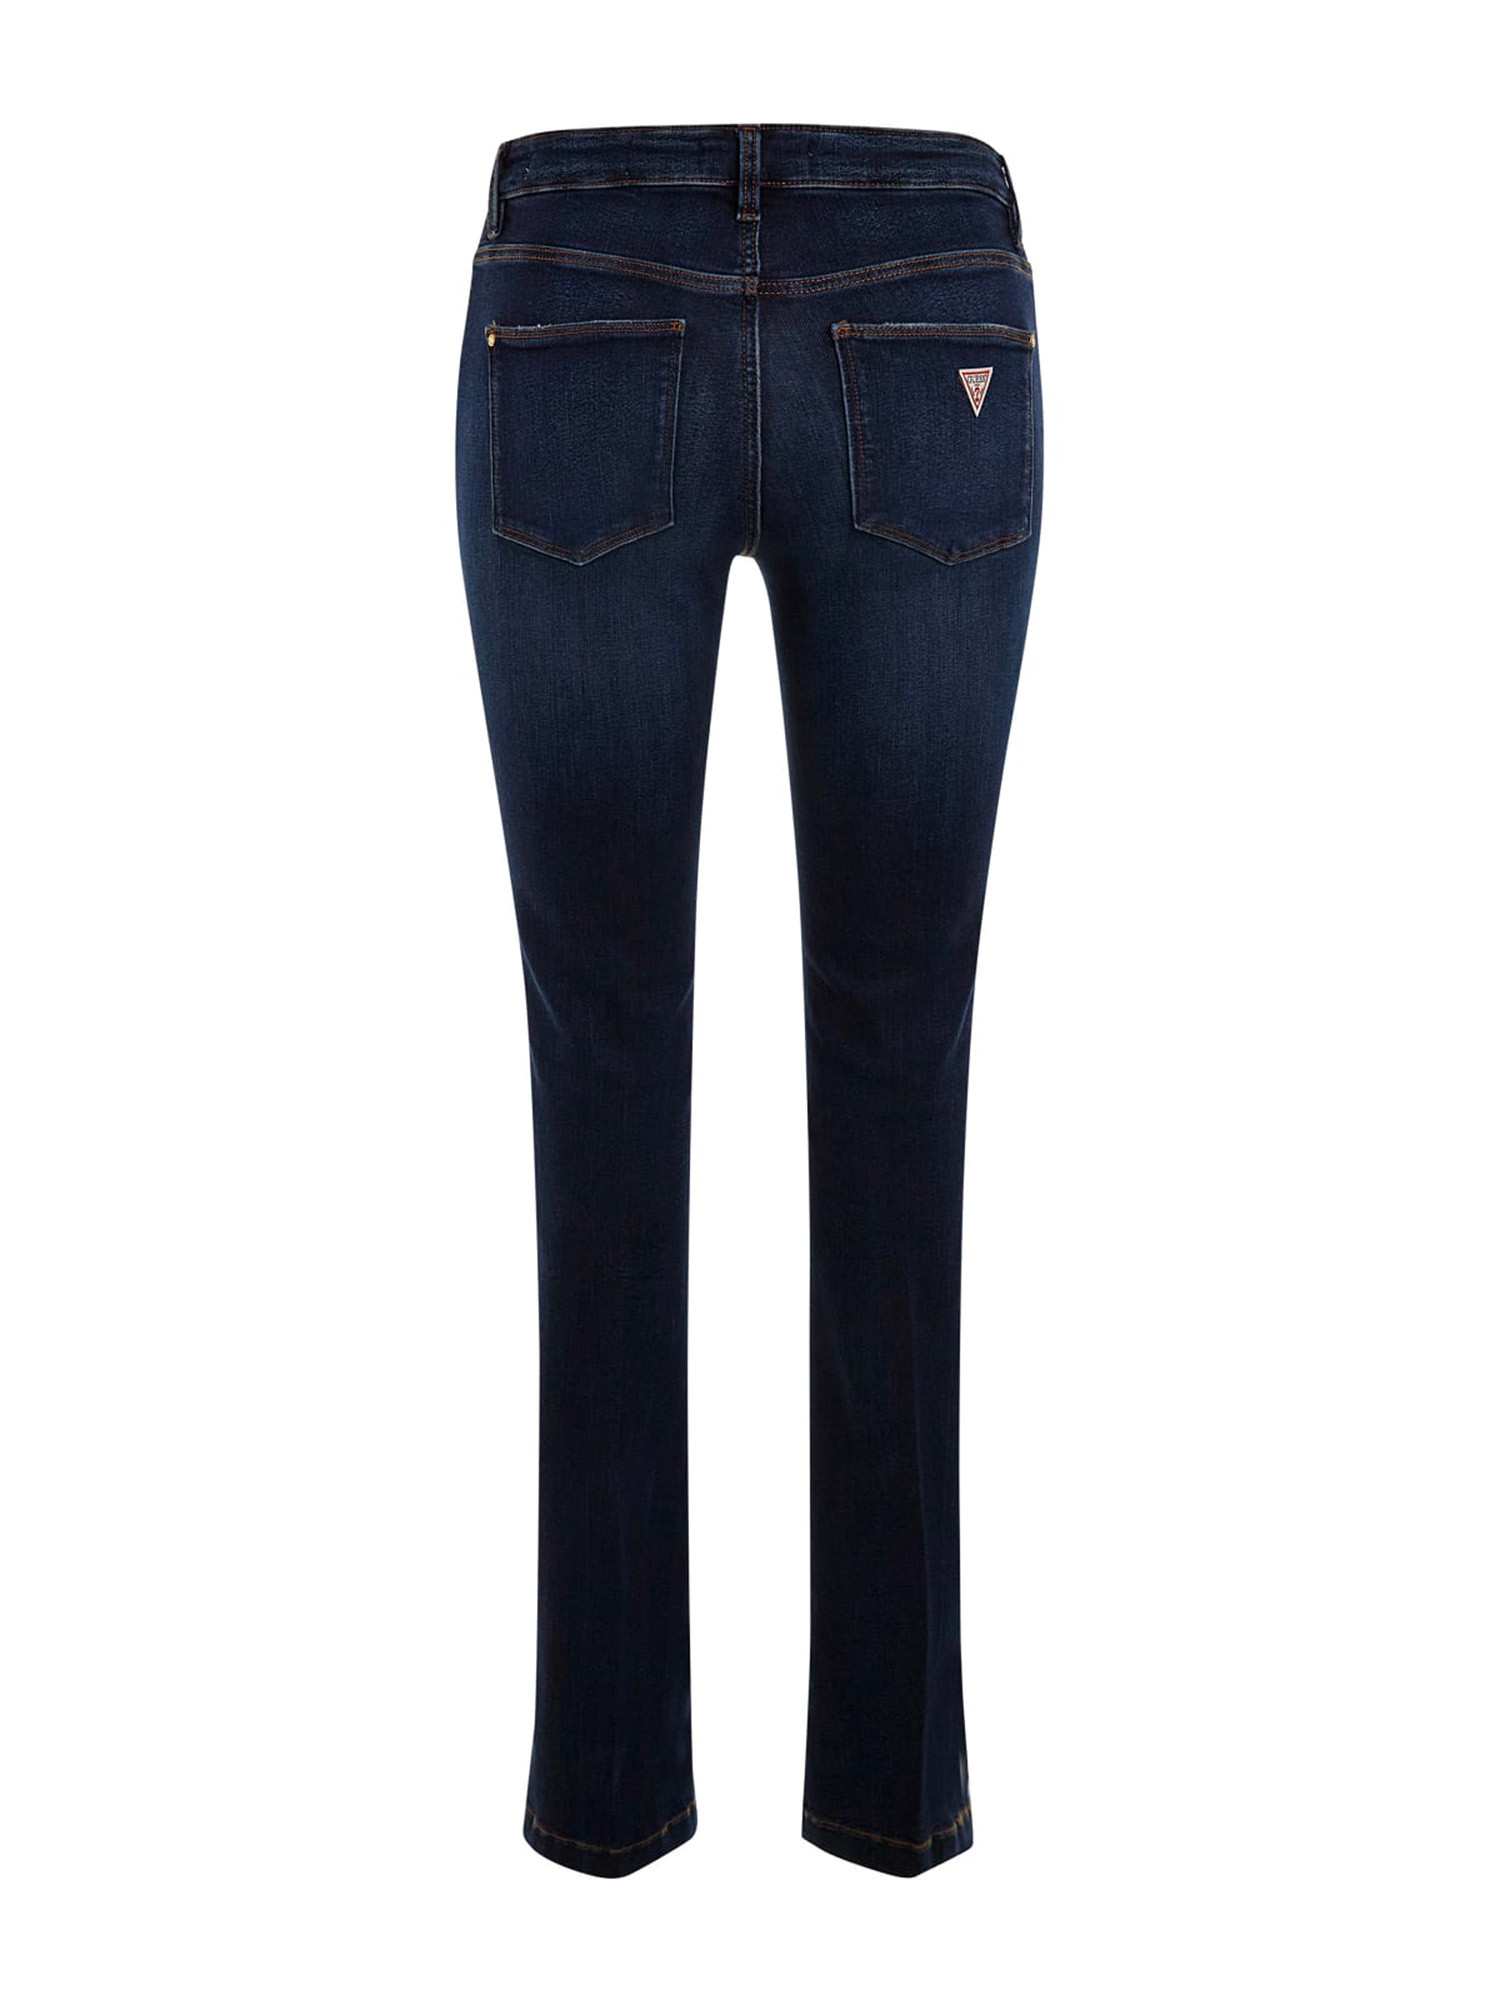 Guess - 5-pocket bootcut jeans, Dark Blue, large image number 1